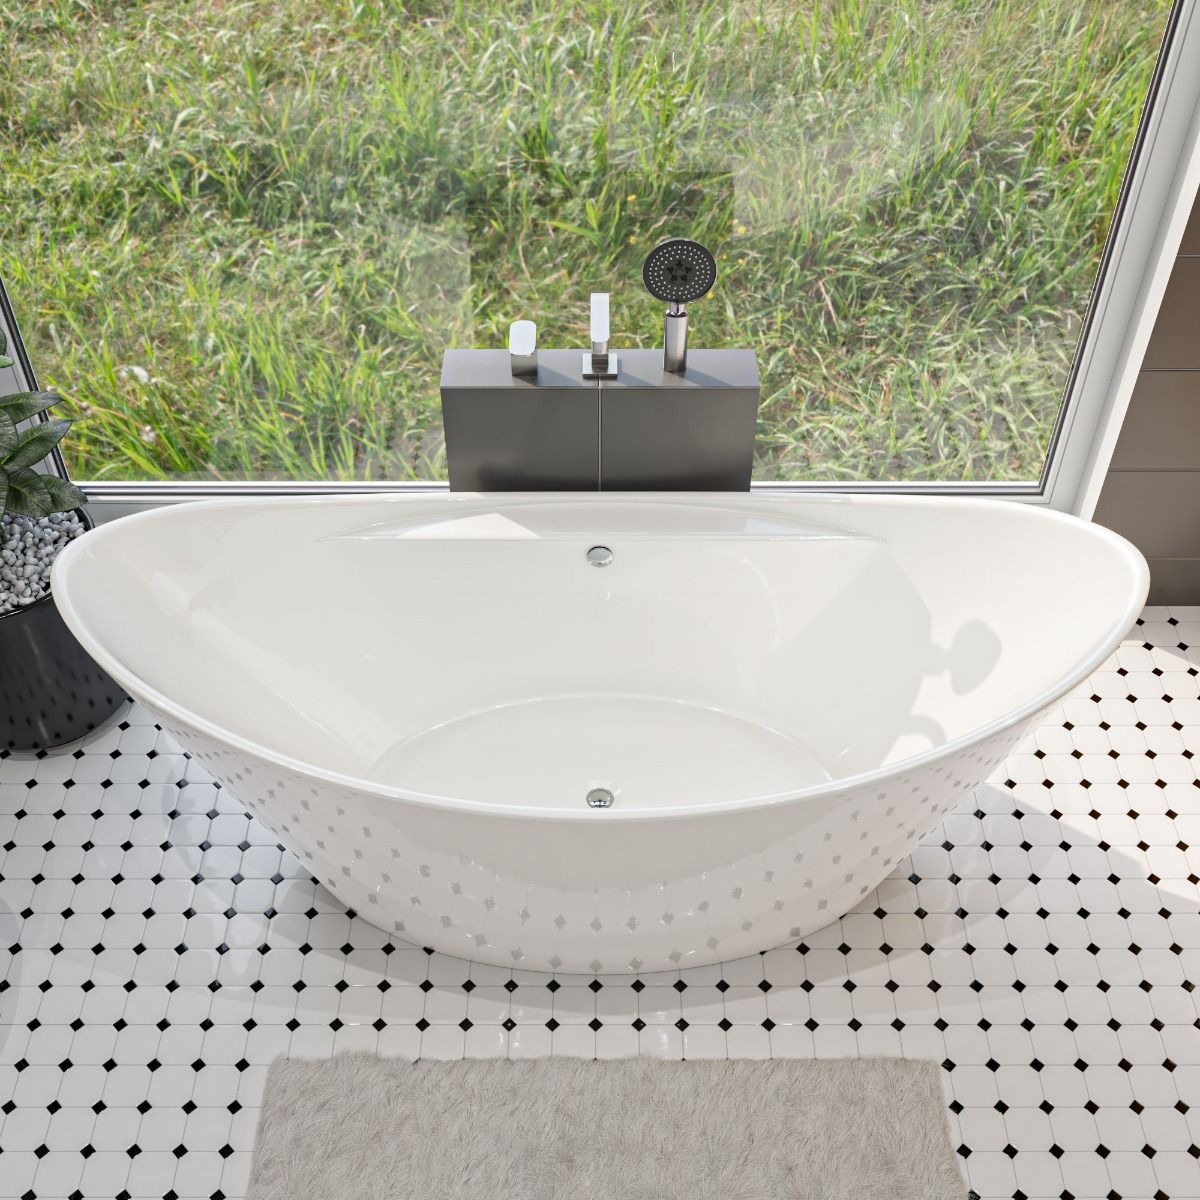 ALFI brand AB8803 68 Inch White Oval Acrylic Free Standing Soaking Bathtub - Elite Vitality